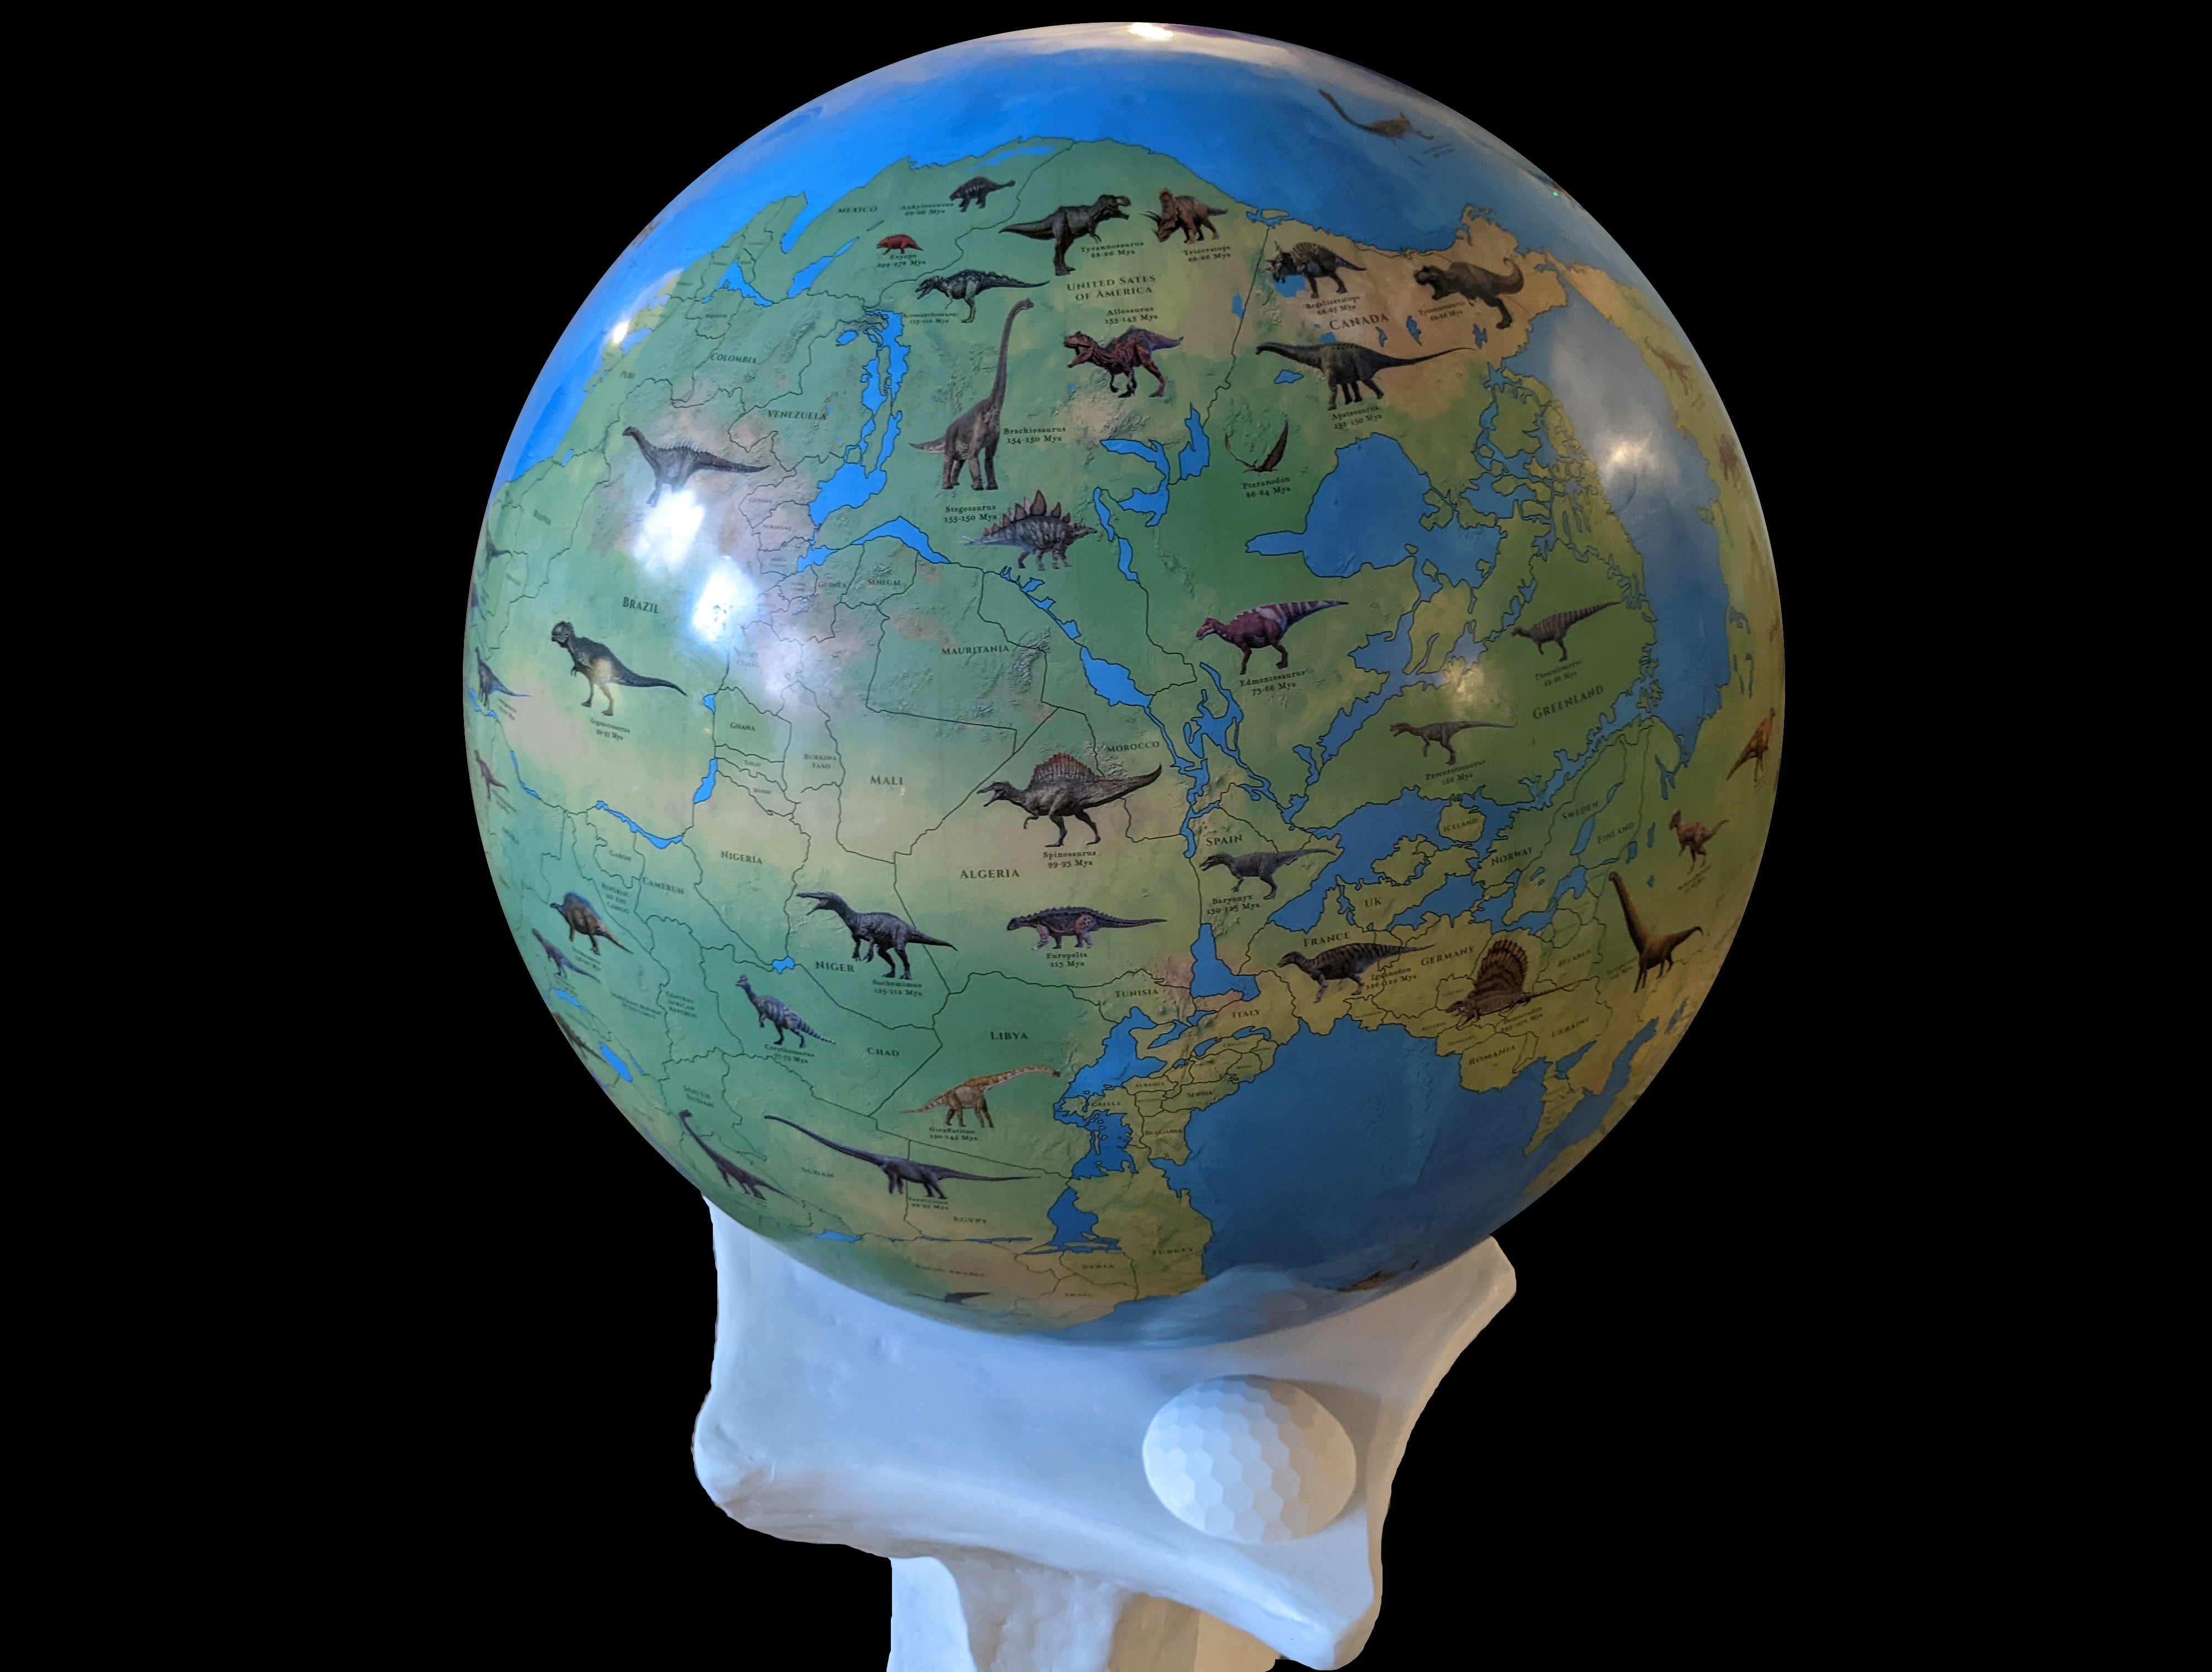 Pangea - Earth 200 million years ago - The Blue Planet Globe - Large world globes custom globe